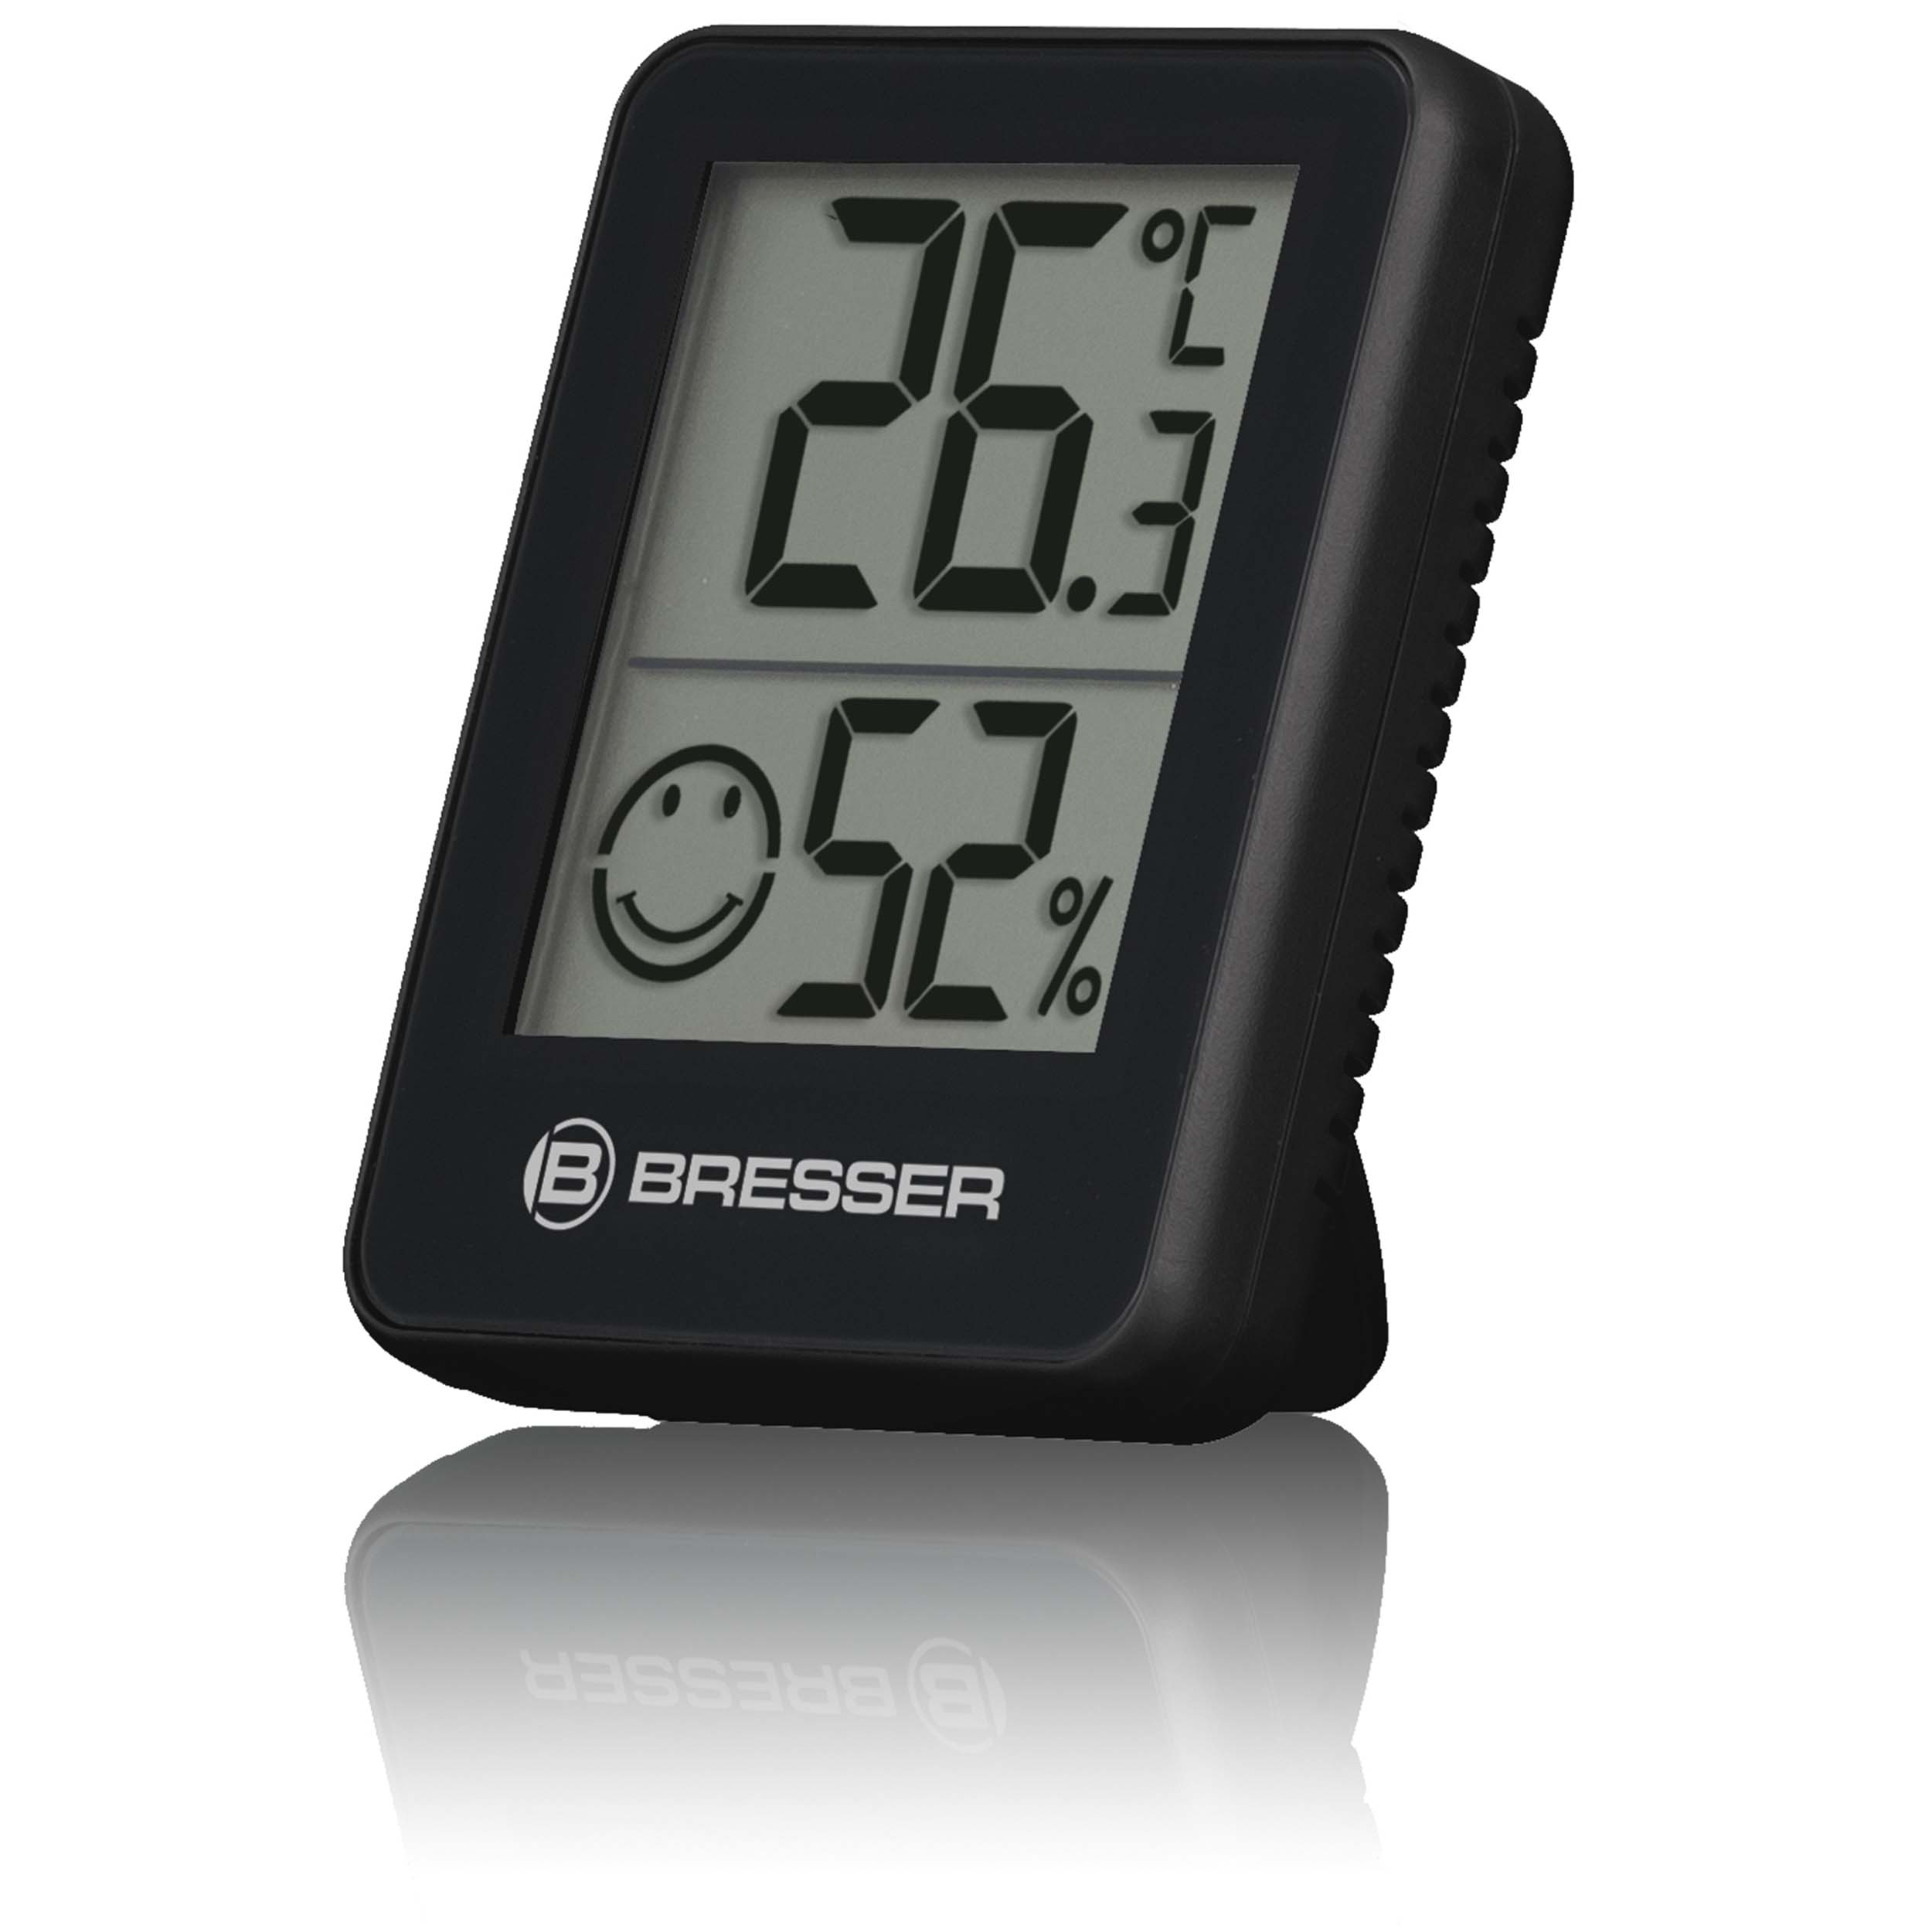 BRESSER Thermo-Hygrometer Wetterstation ClimaTemp